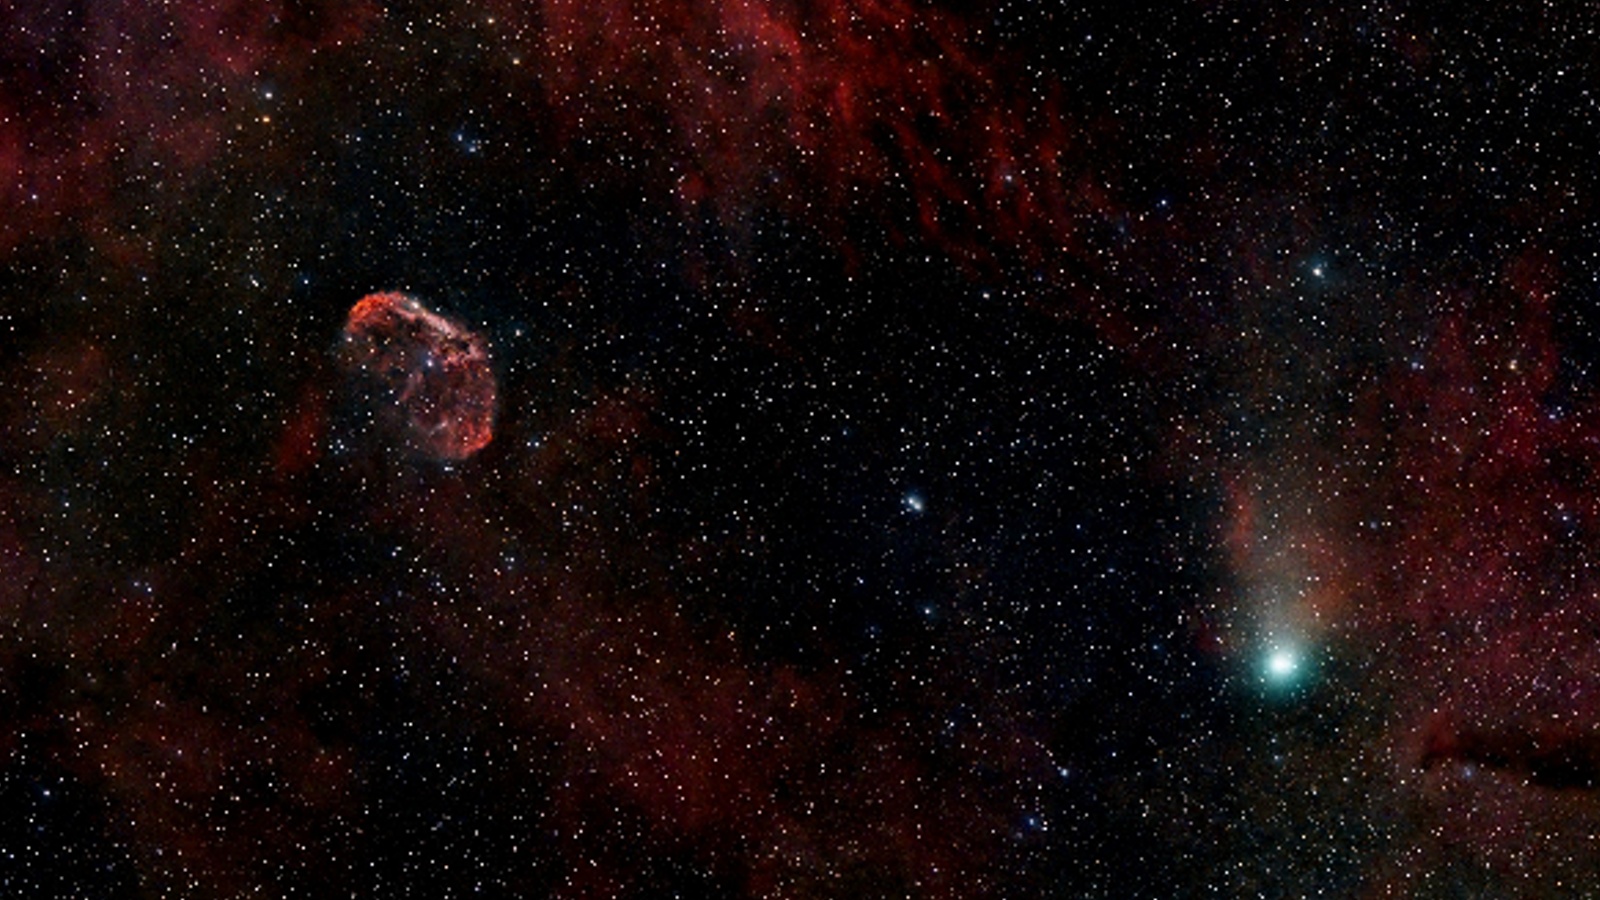 explosive, green 'devil comet' photobombs ethereal nebula as it races toward earth